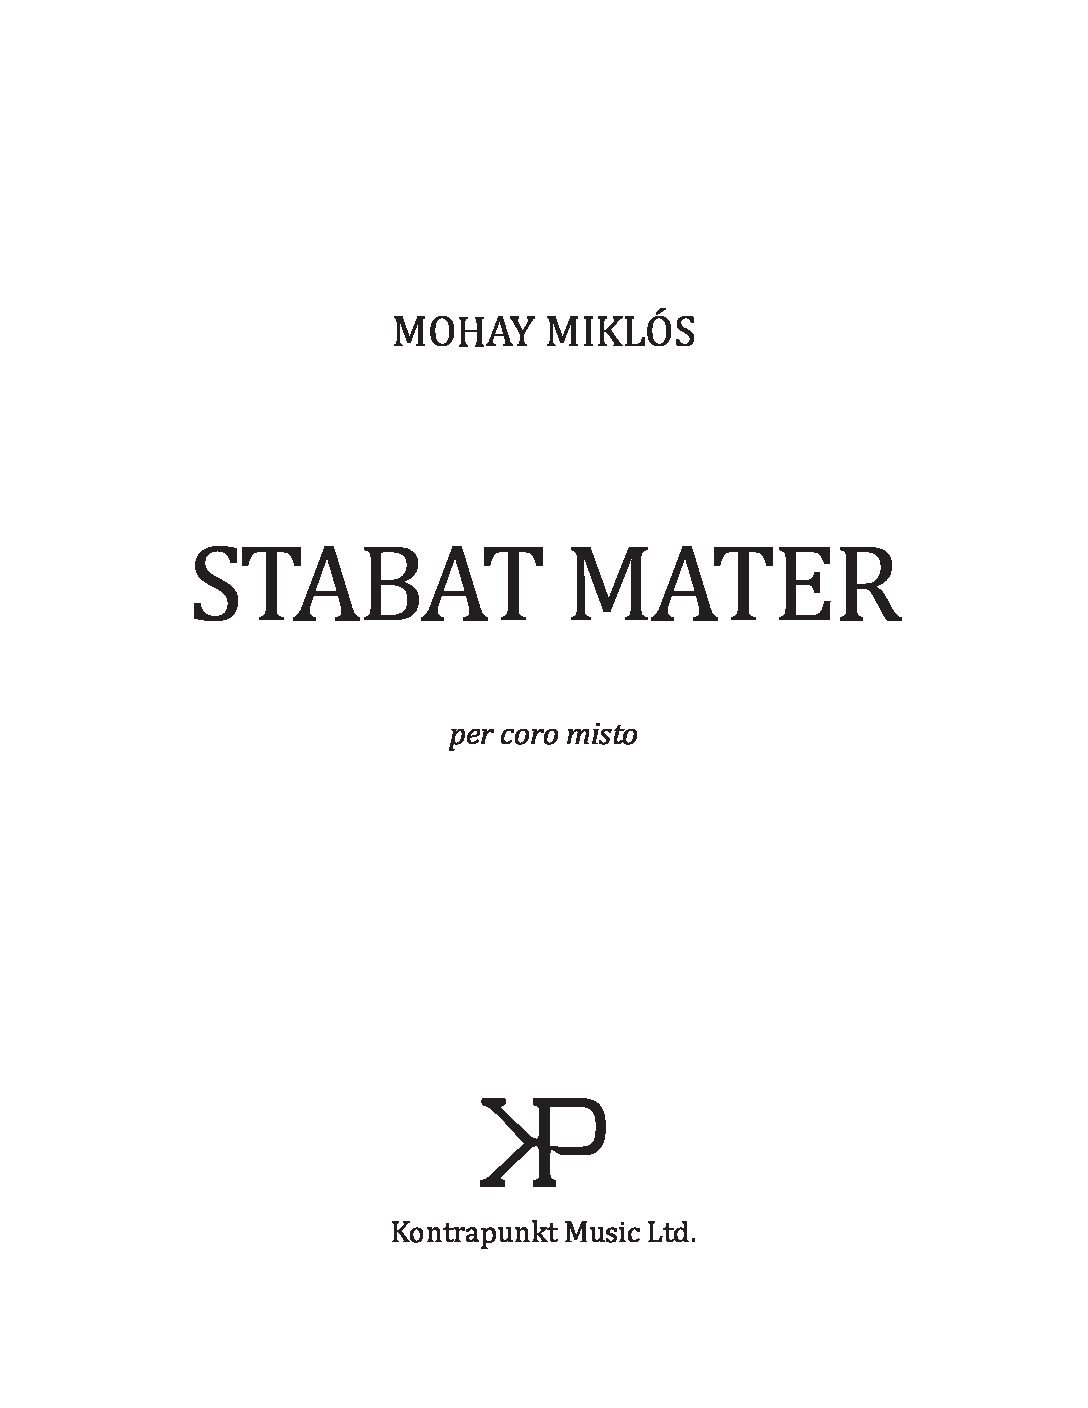 Miklós Mohay: Stabat Mater – per coro misto